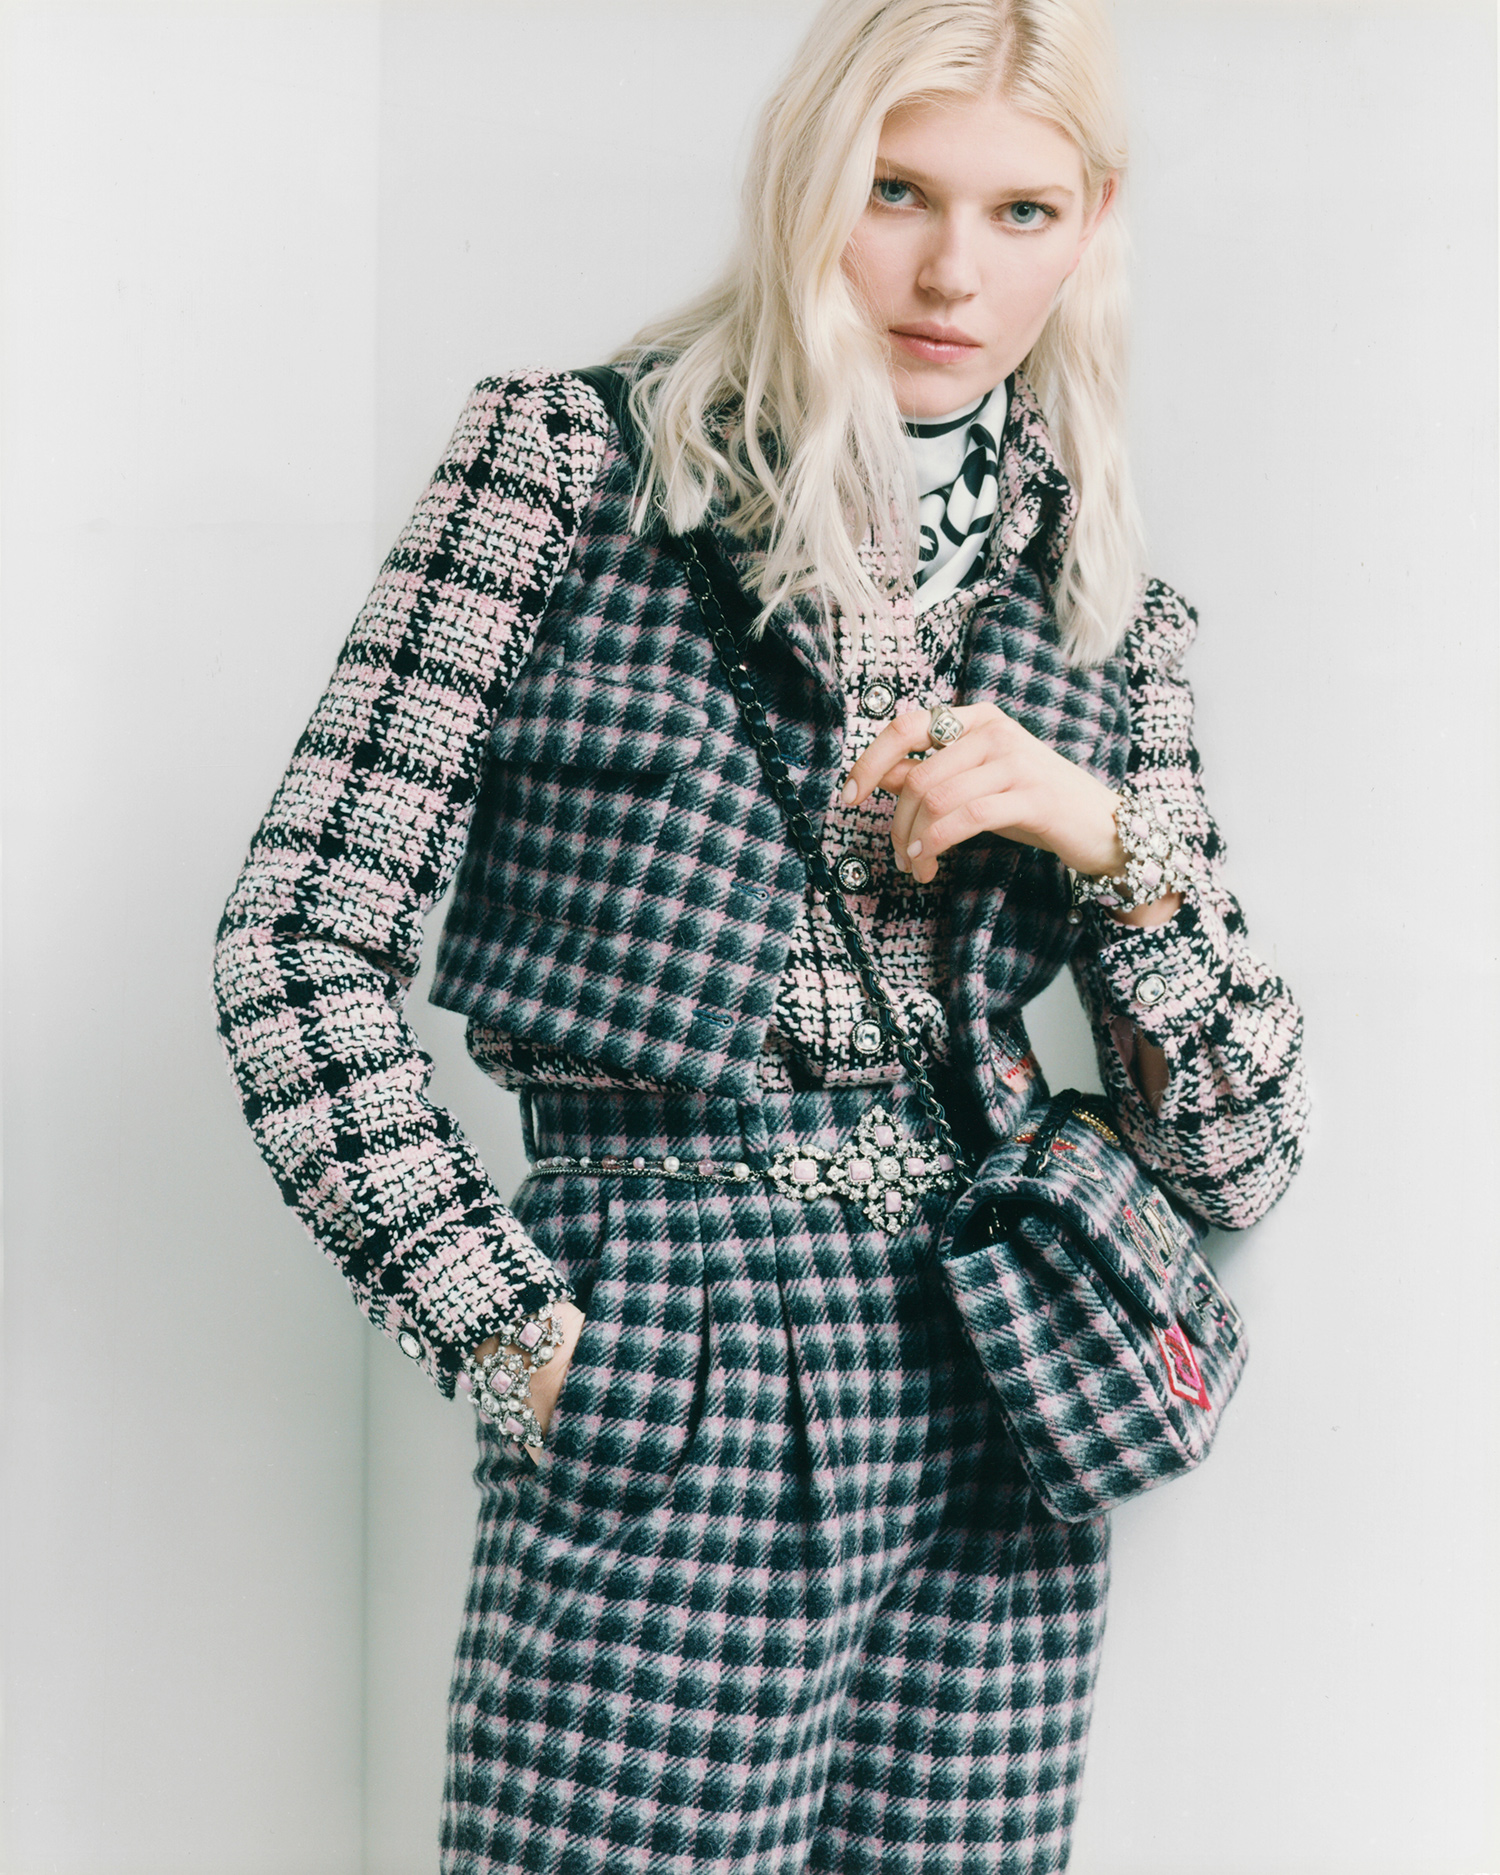 Polish model Ola Rudnicka is Chanel's latest muse - INDIE Magazine